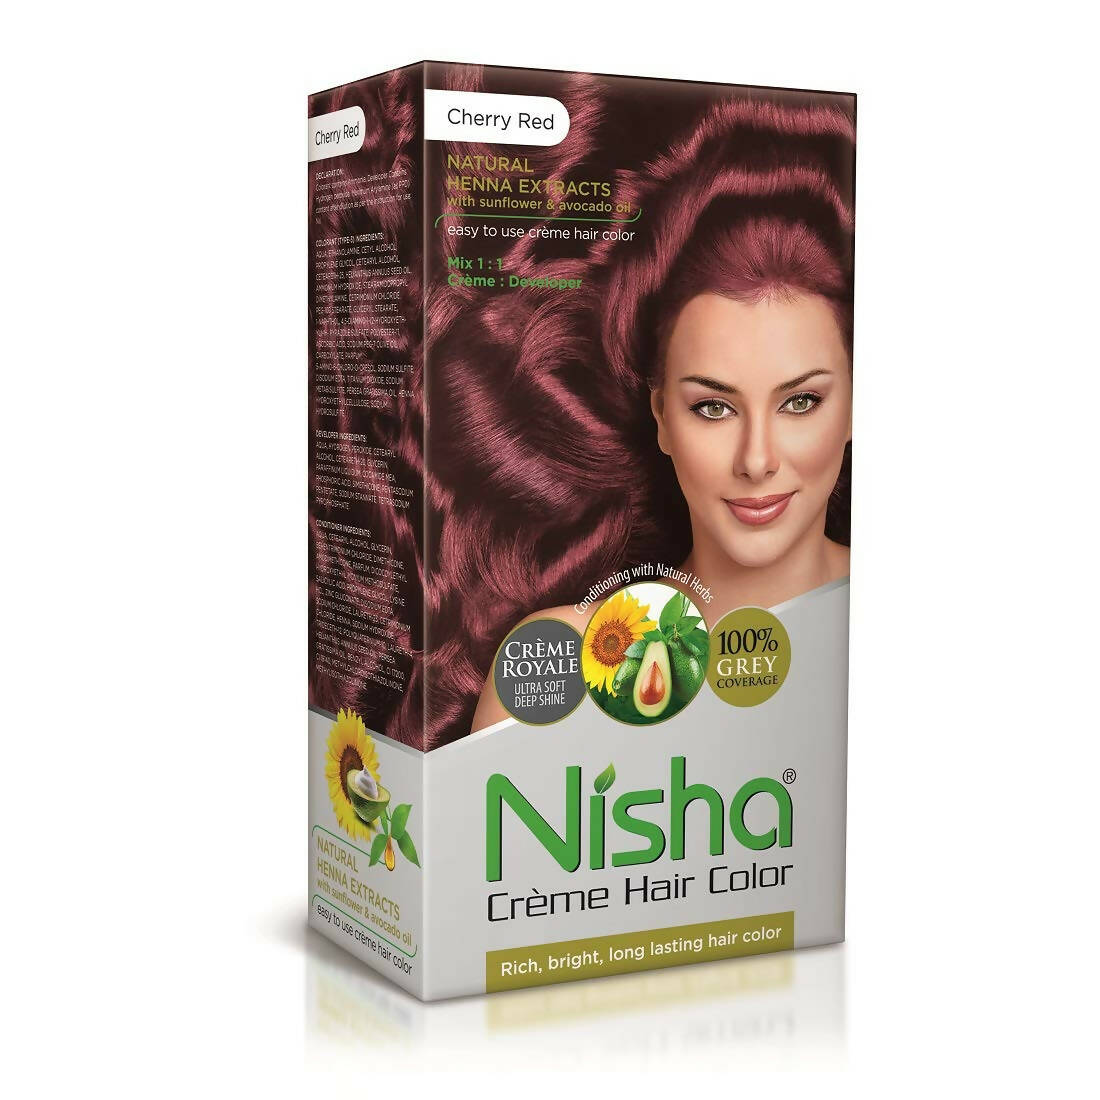 Nisha Creme Hair Color Cherry Red